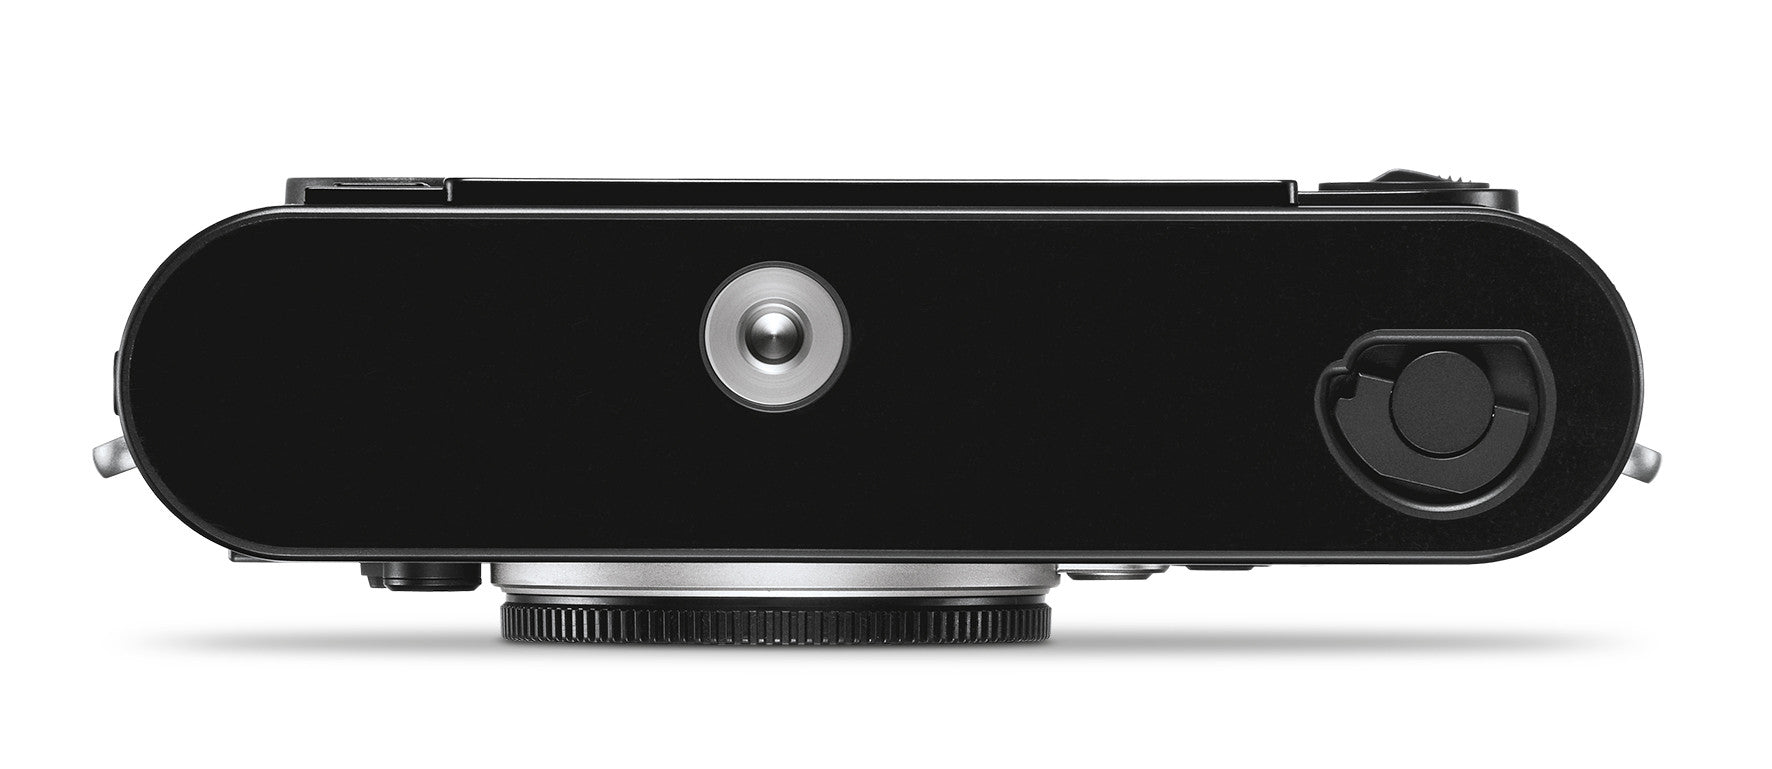 Leica M10 Digital Camera (Black), camera mirrorless cameras, Leica - Pictureline  - 4